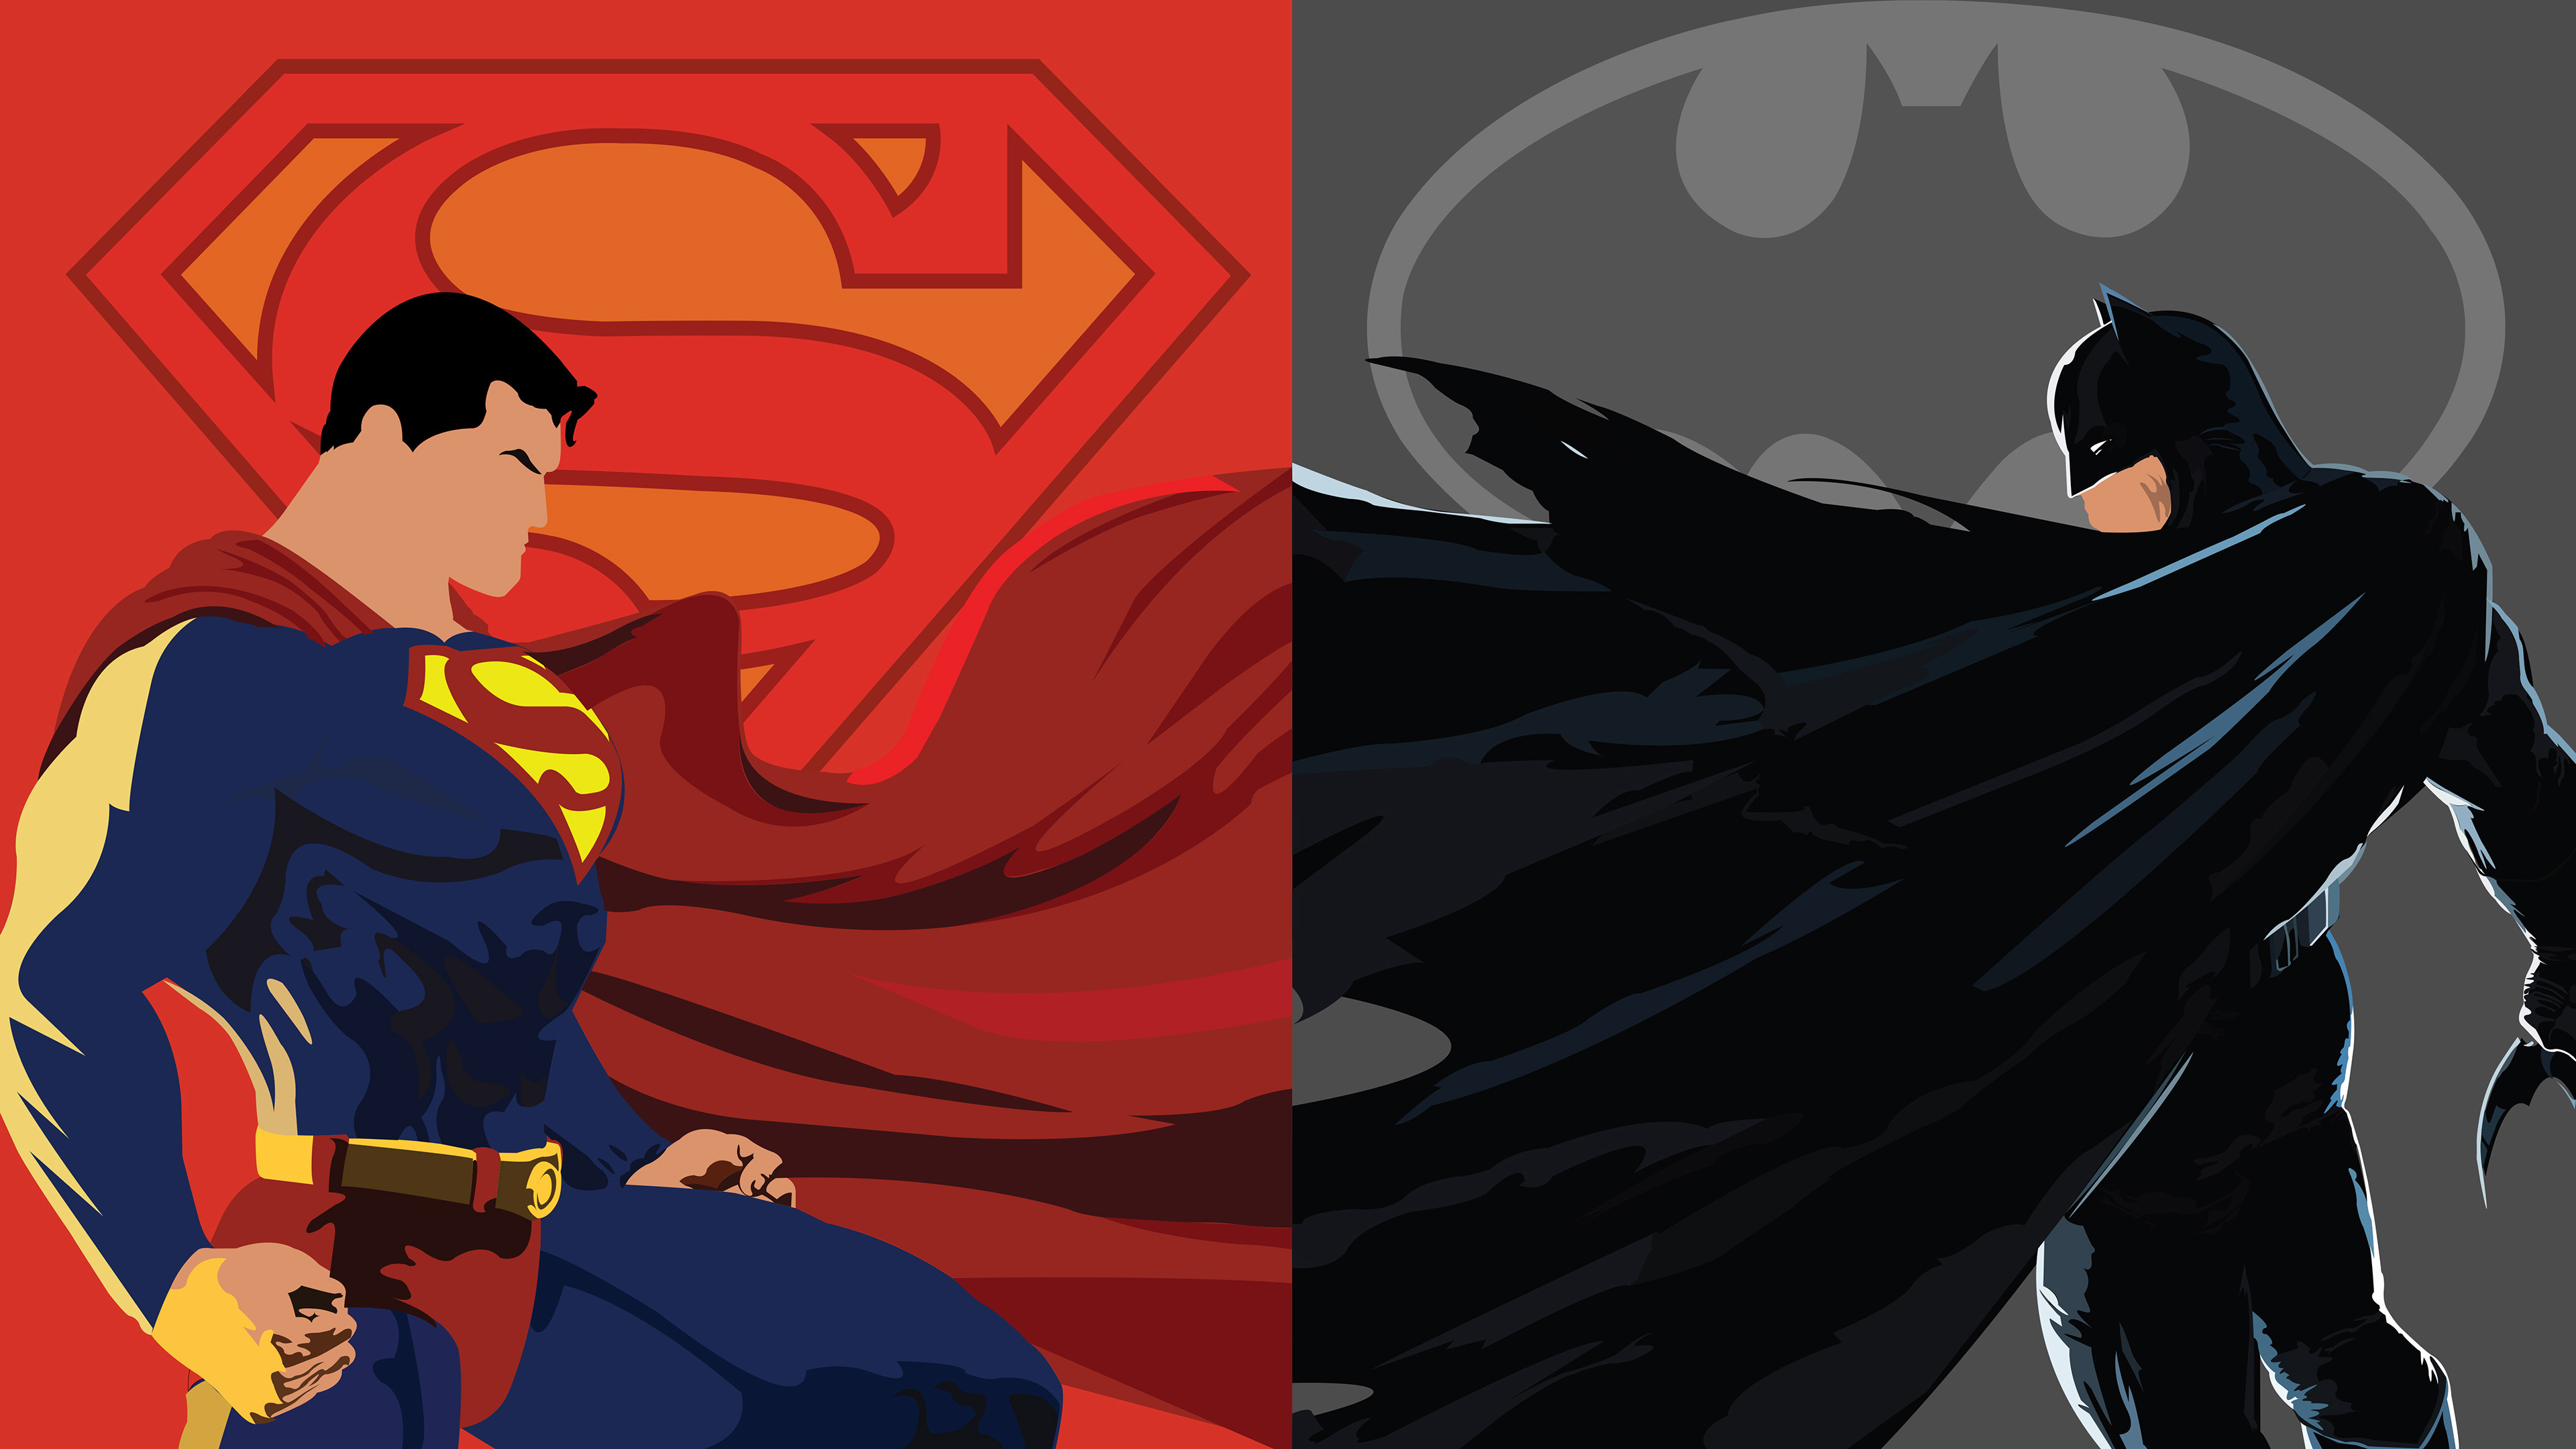 Superman Vs Batman 4k Art Hd Superheroes 4k Wallpapers Images Backgrounds Photos And Pictures